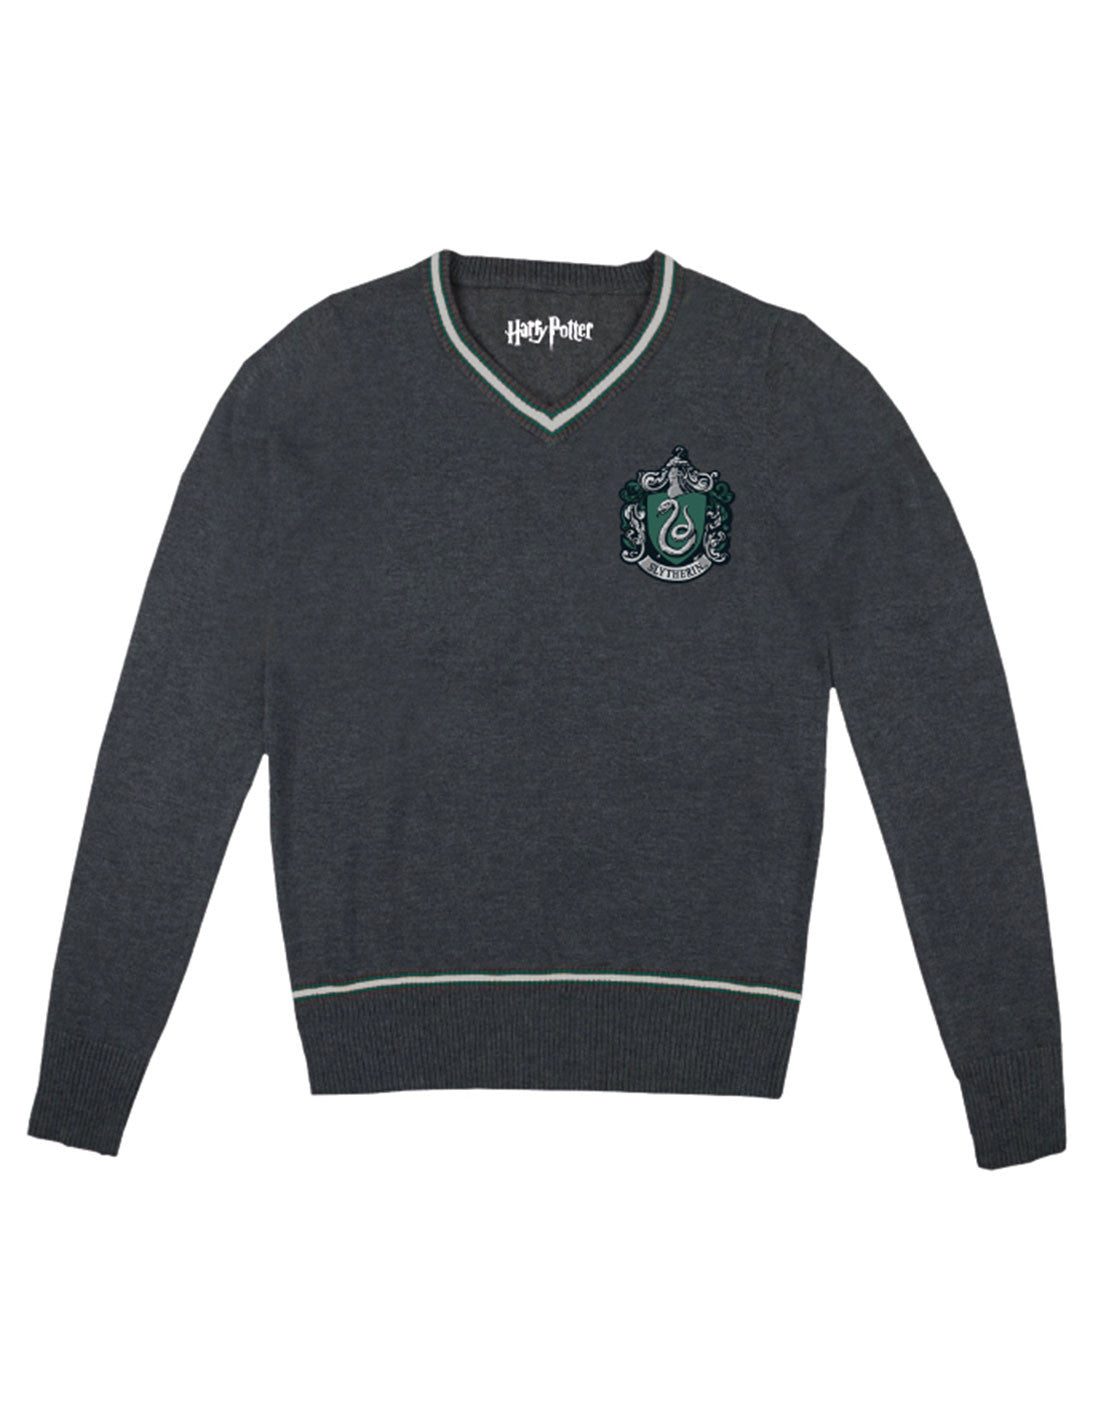 Harry Potter Sweater - Slytherin Class